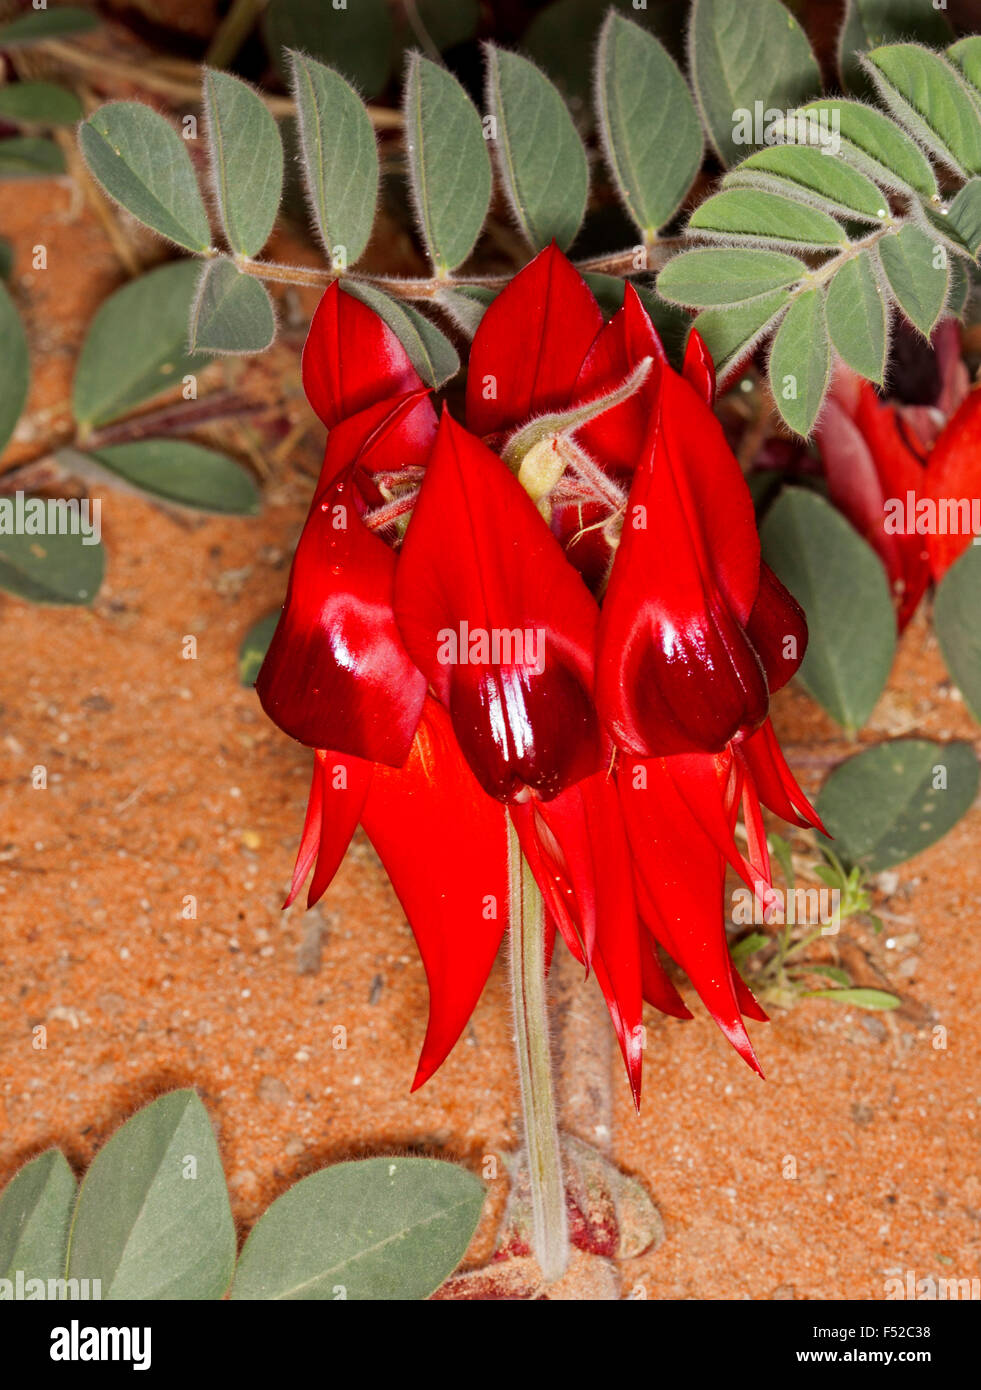 Vivid red flowers and leaves of Sturt's desert pea Swainsona formosa growing in red soil in Flinders Ranges in outback Australia Stock Photo